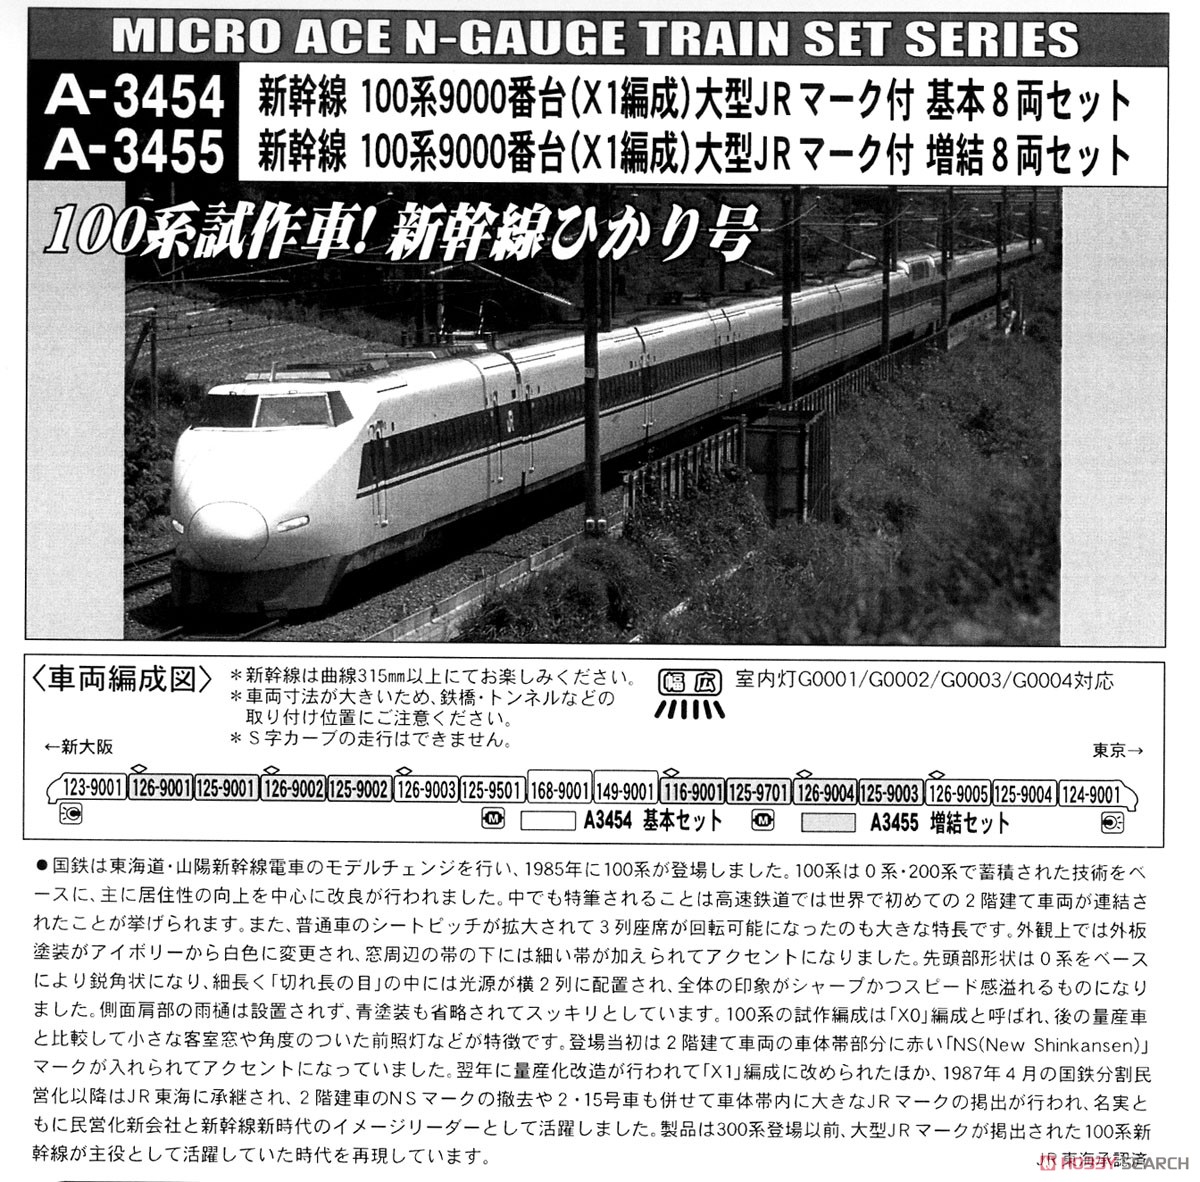 Shinkansen Series 100-9000 (X1 Formation) w/Large J.R. Mark (Basic 8-Car Set) (Model Train) About item2